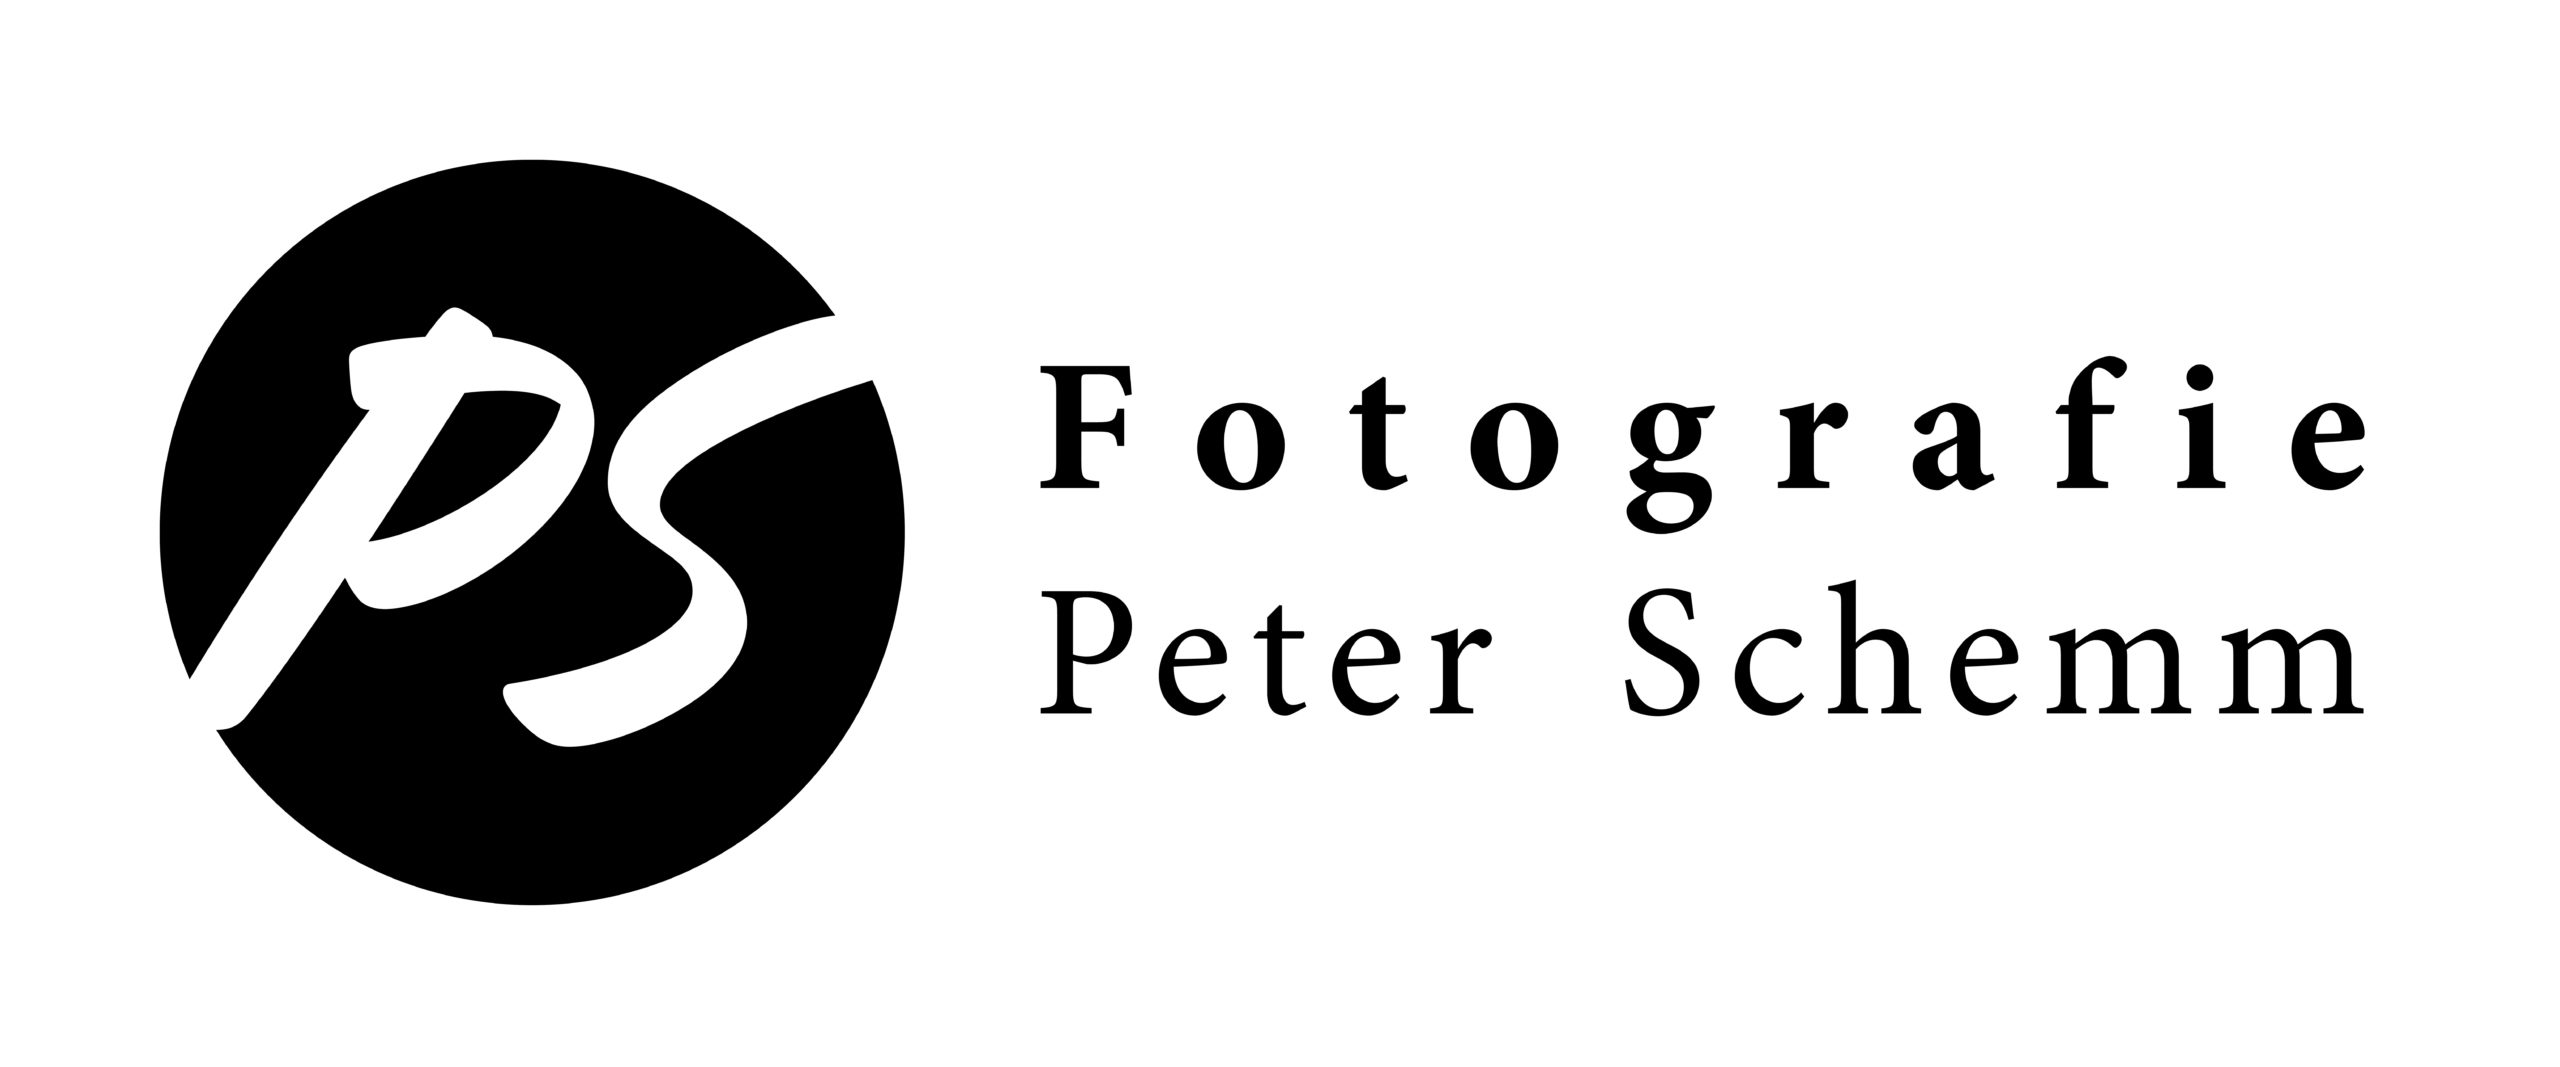 Peter Schemm Fotografie Logo